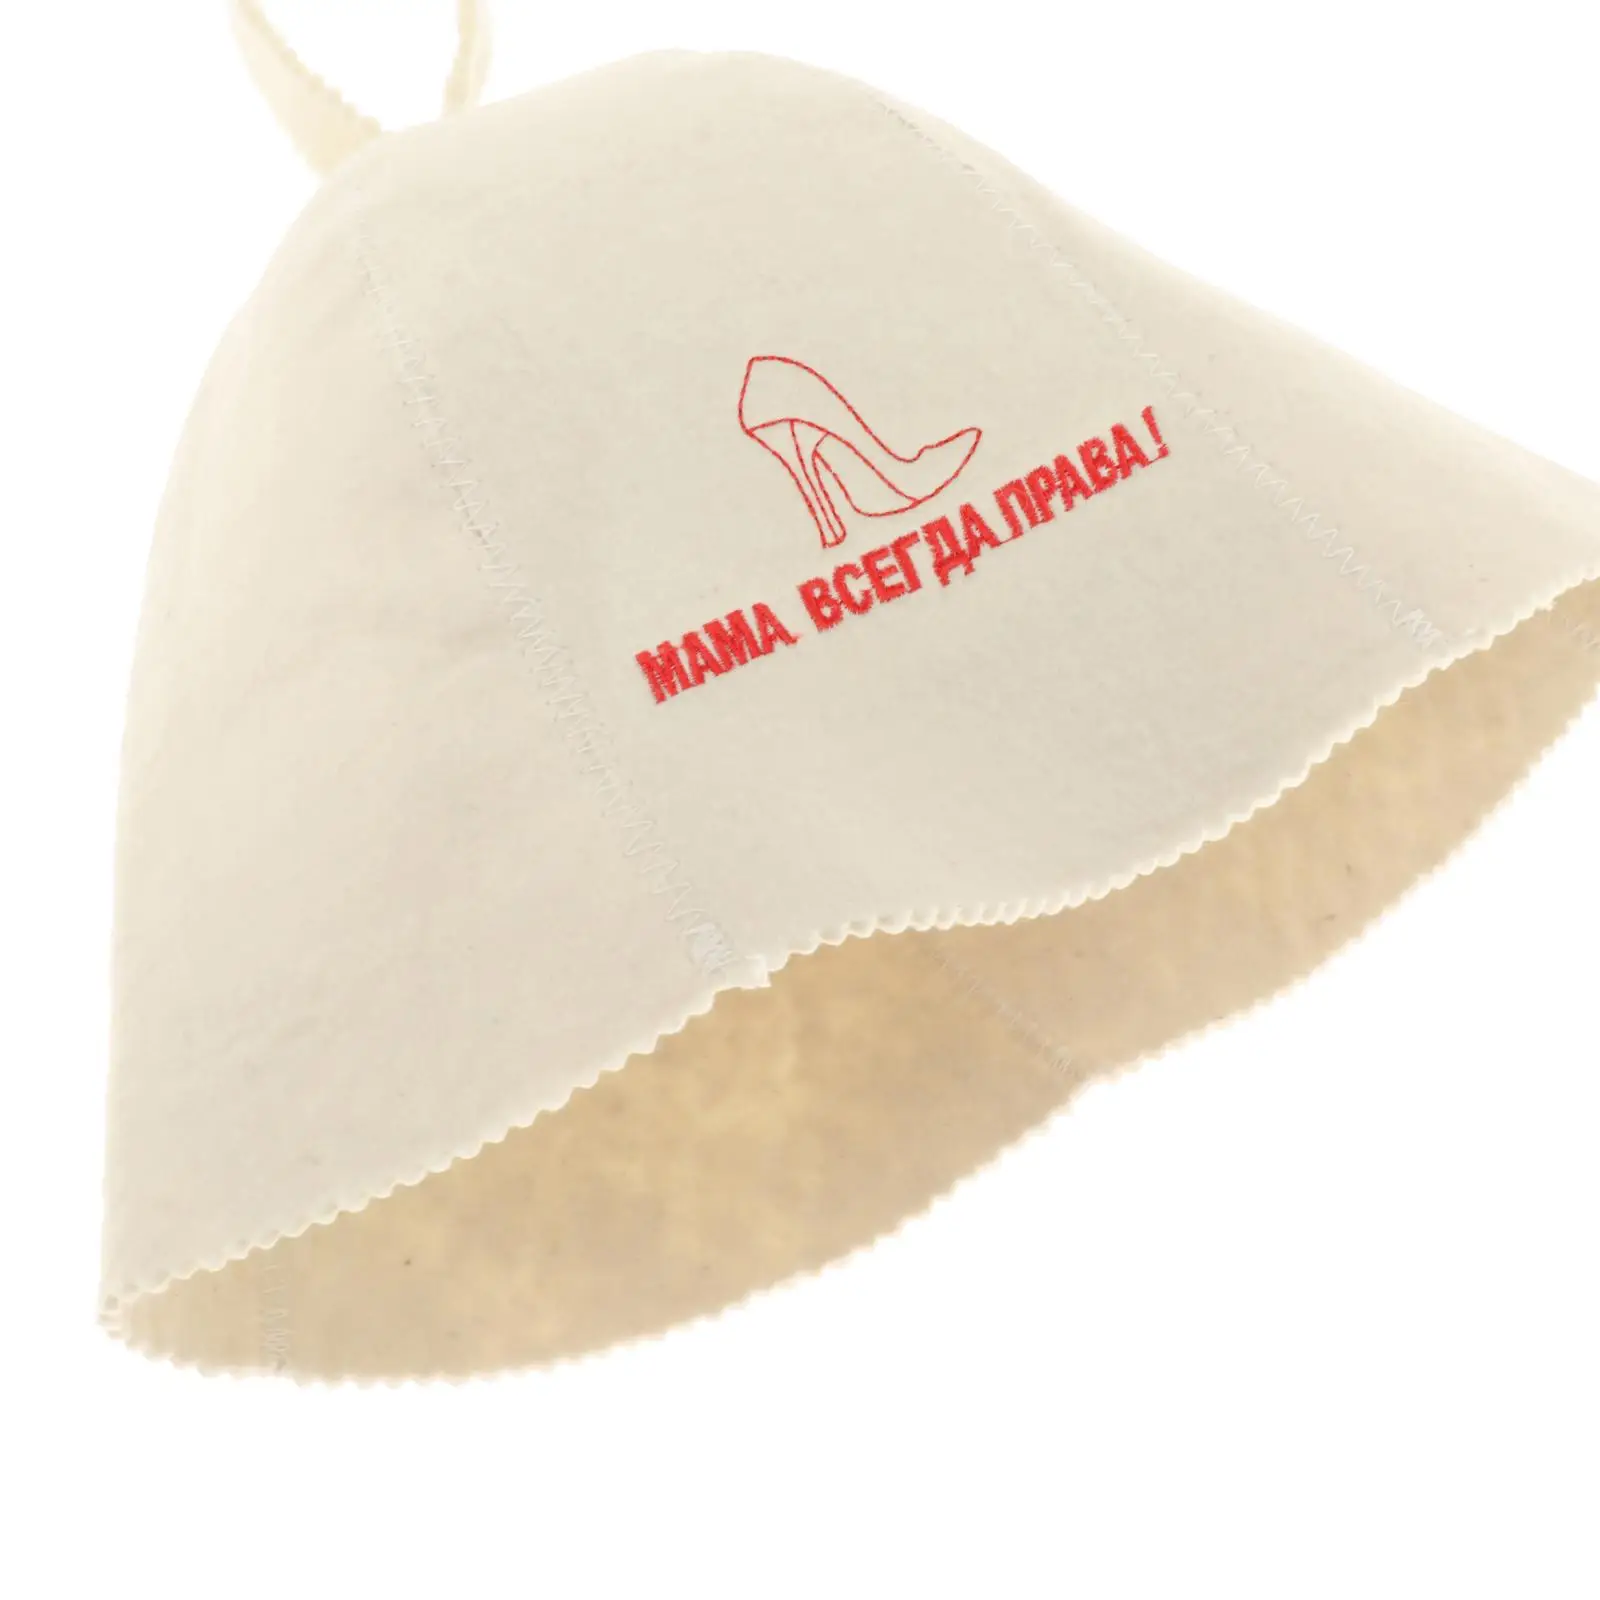 Unisex Wool Felt Hat for Sauna Banya Bathhouse Head Protecting Embroidered